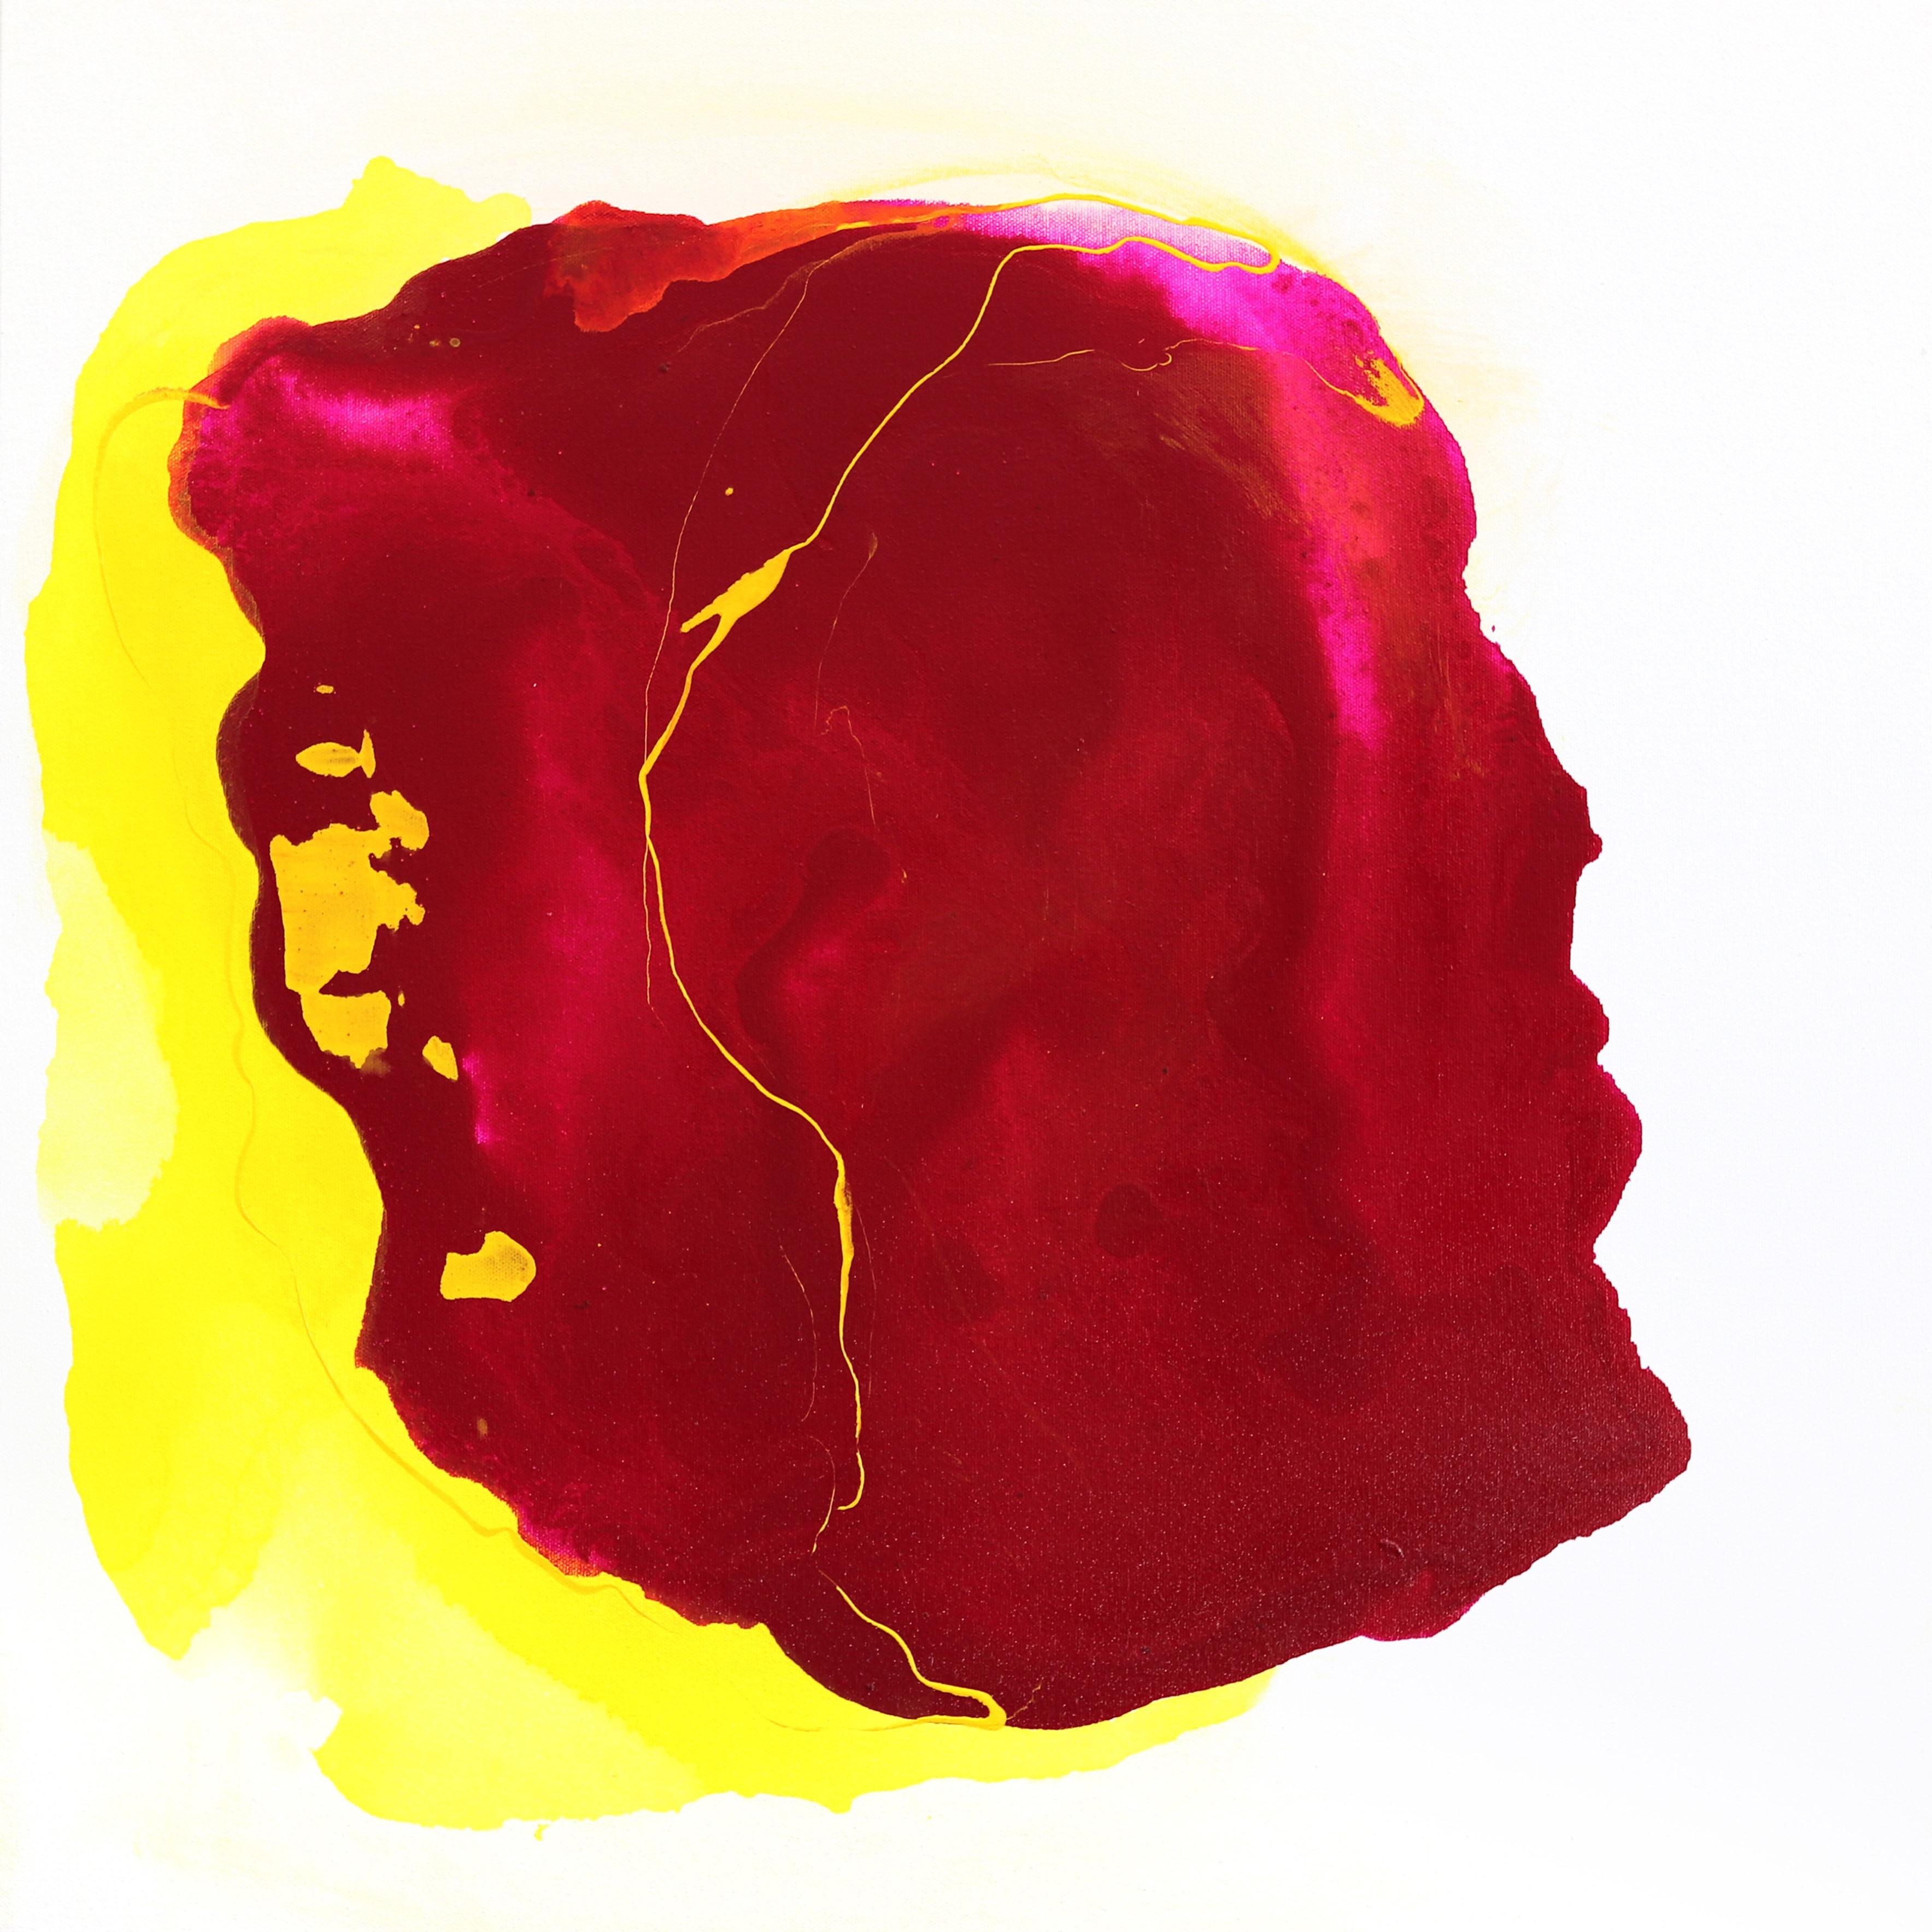 Reflections - Abstract Yellow Magenta Original Painting on Canvas - Mixed Media Art by Clara Berta